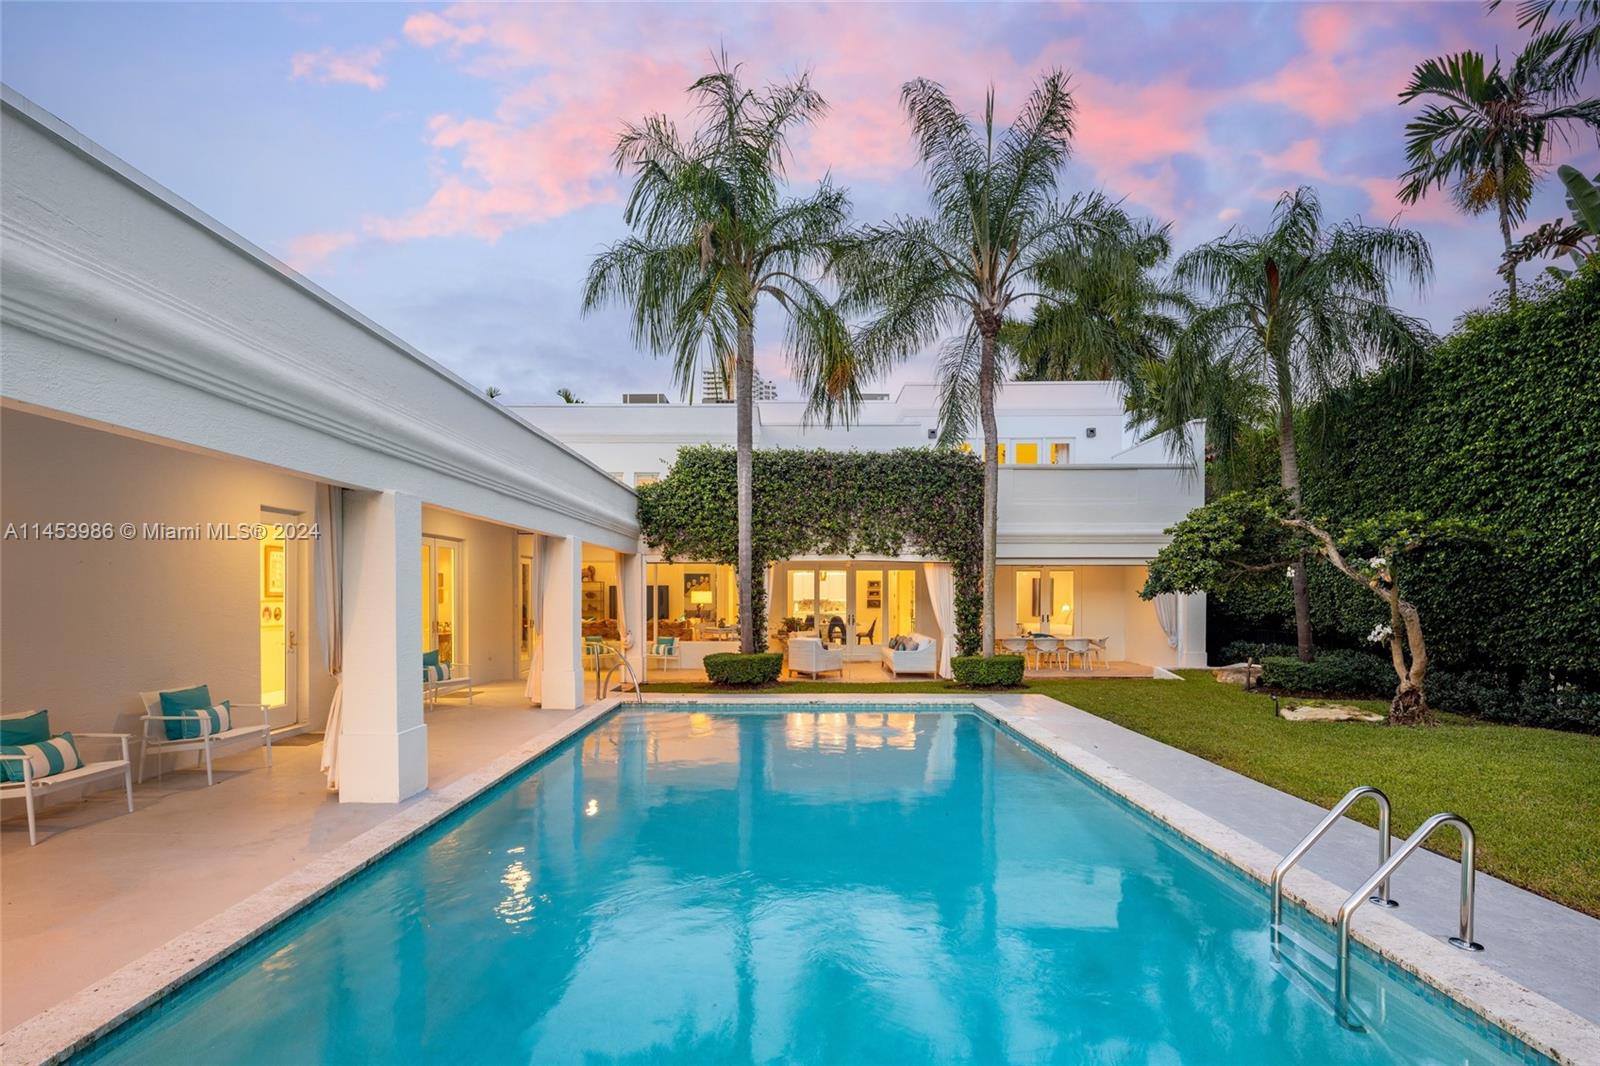 Property for Sale at 6350 Allison Rd, Miami Beach, Miami-Dade County, Florida - Bedrooms: 5 
Bathrooms: 6  - $13,500,000